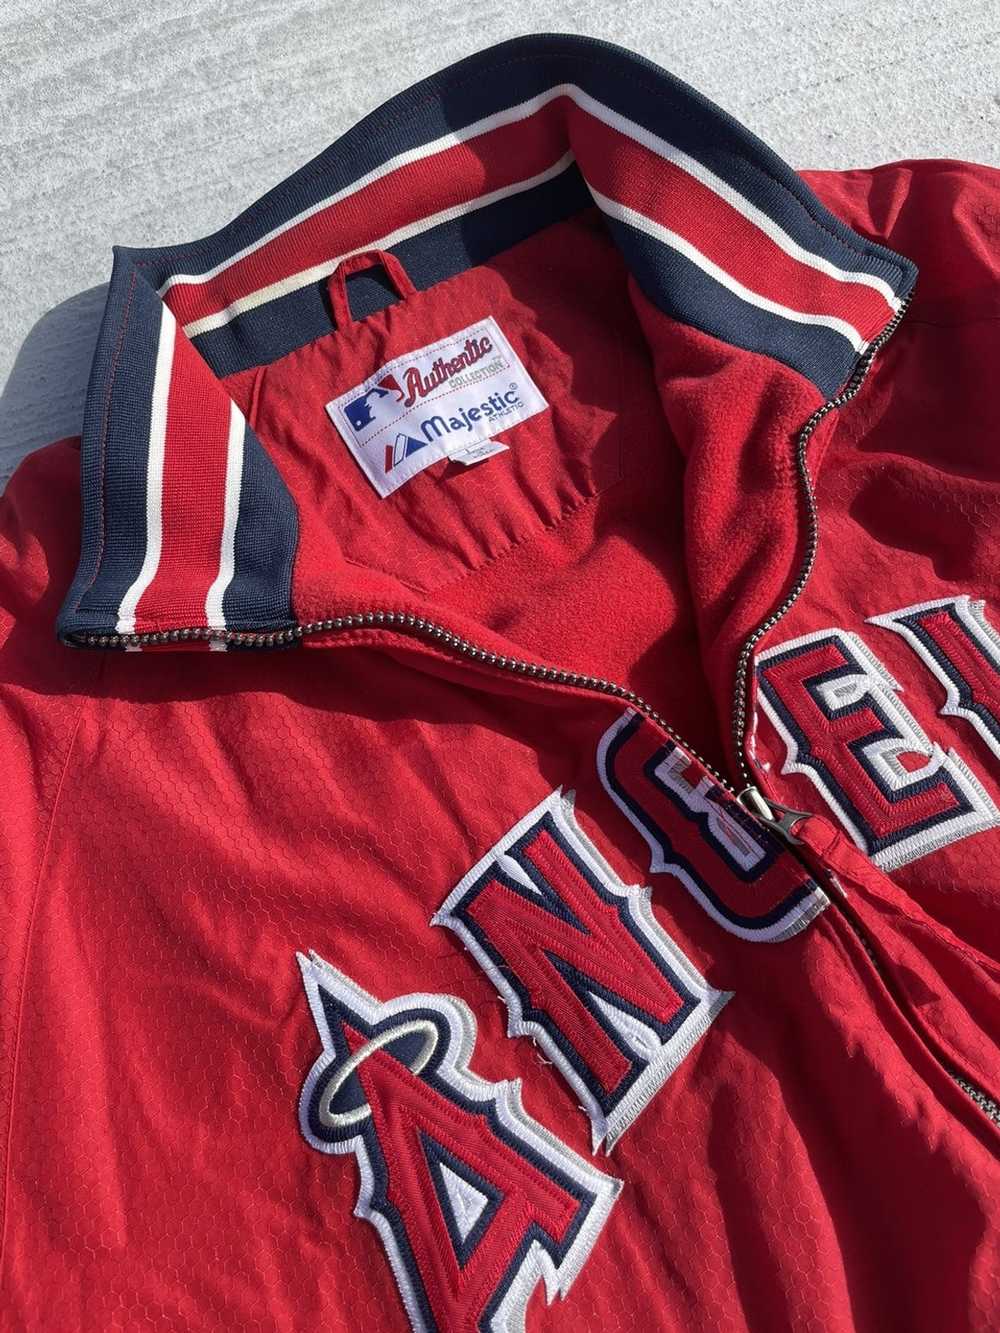 Majestic MLB Anaheim Angels Men's Warm Up Jersey #51 Size 48